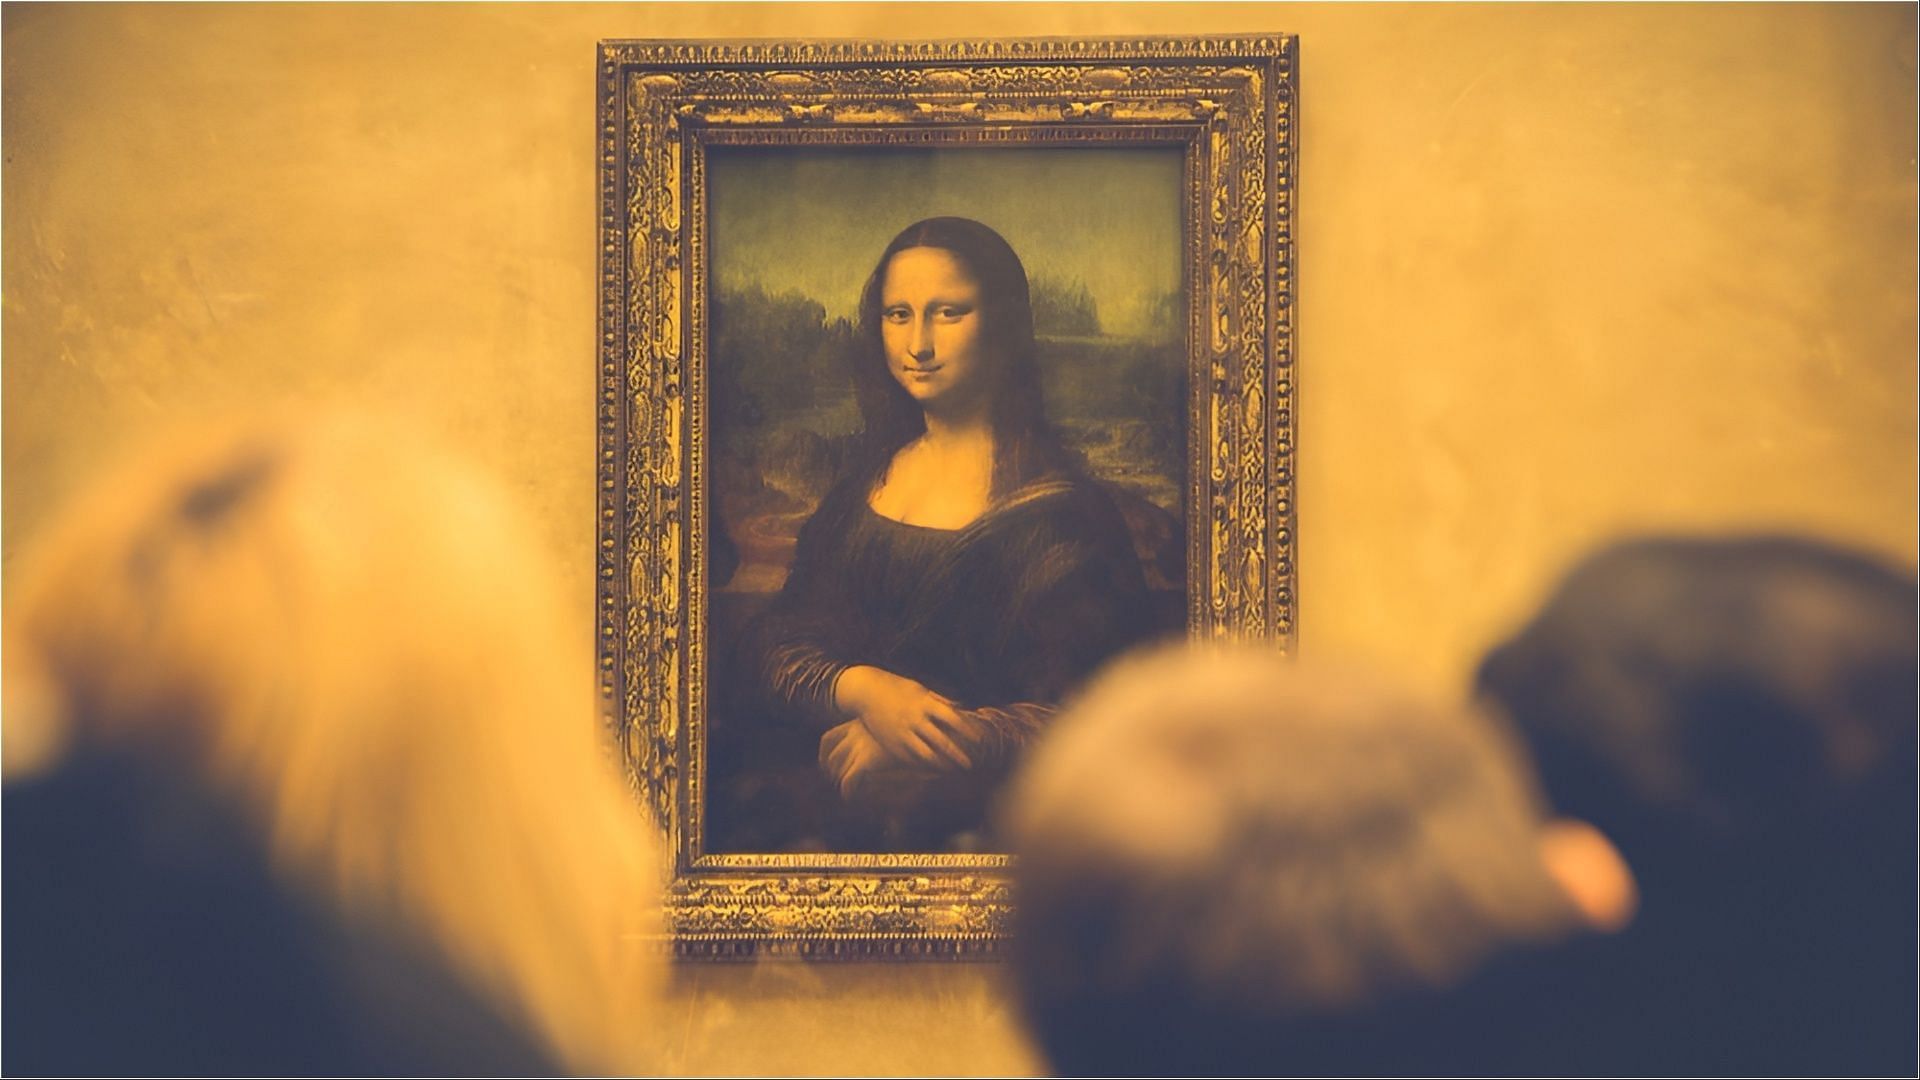 Environmental protestors were spotted throwing soup on Mona Lisa painting (Representative image via Unsplash)